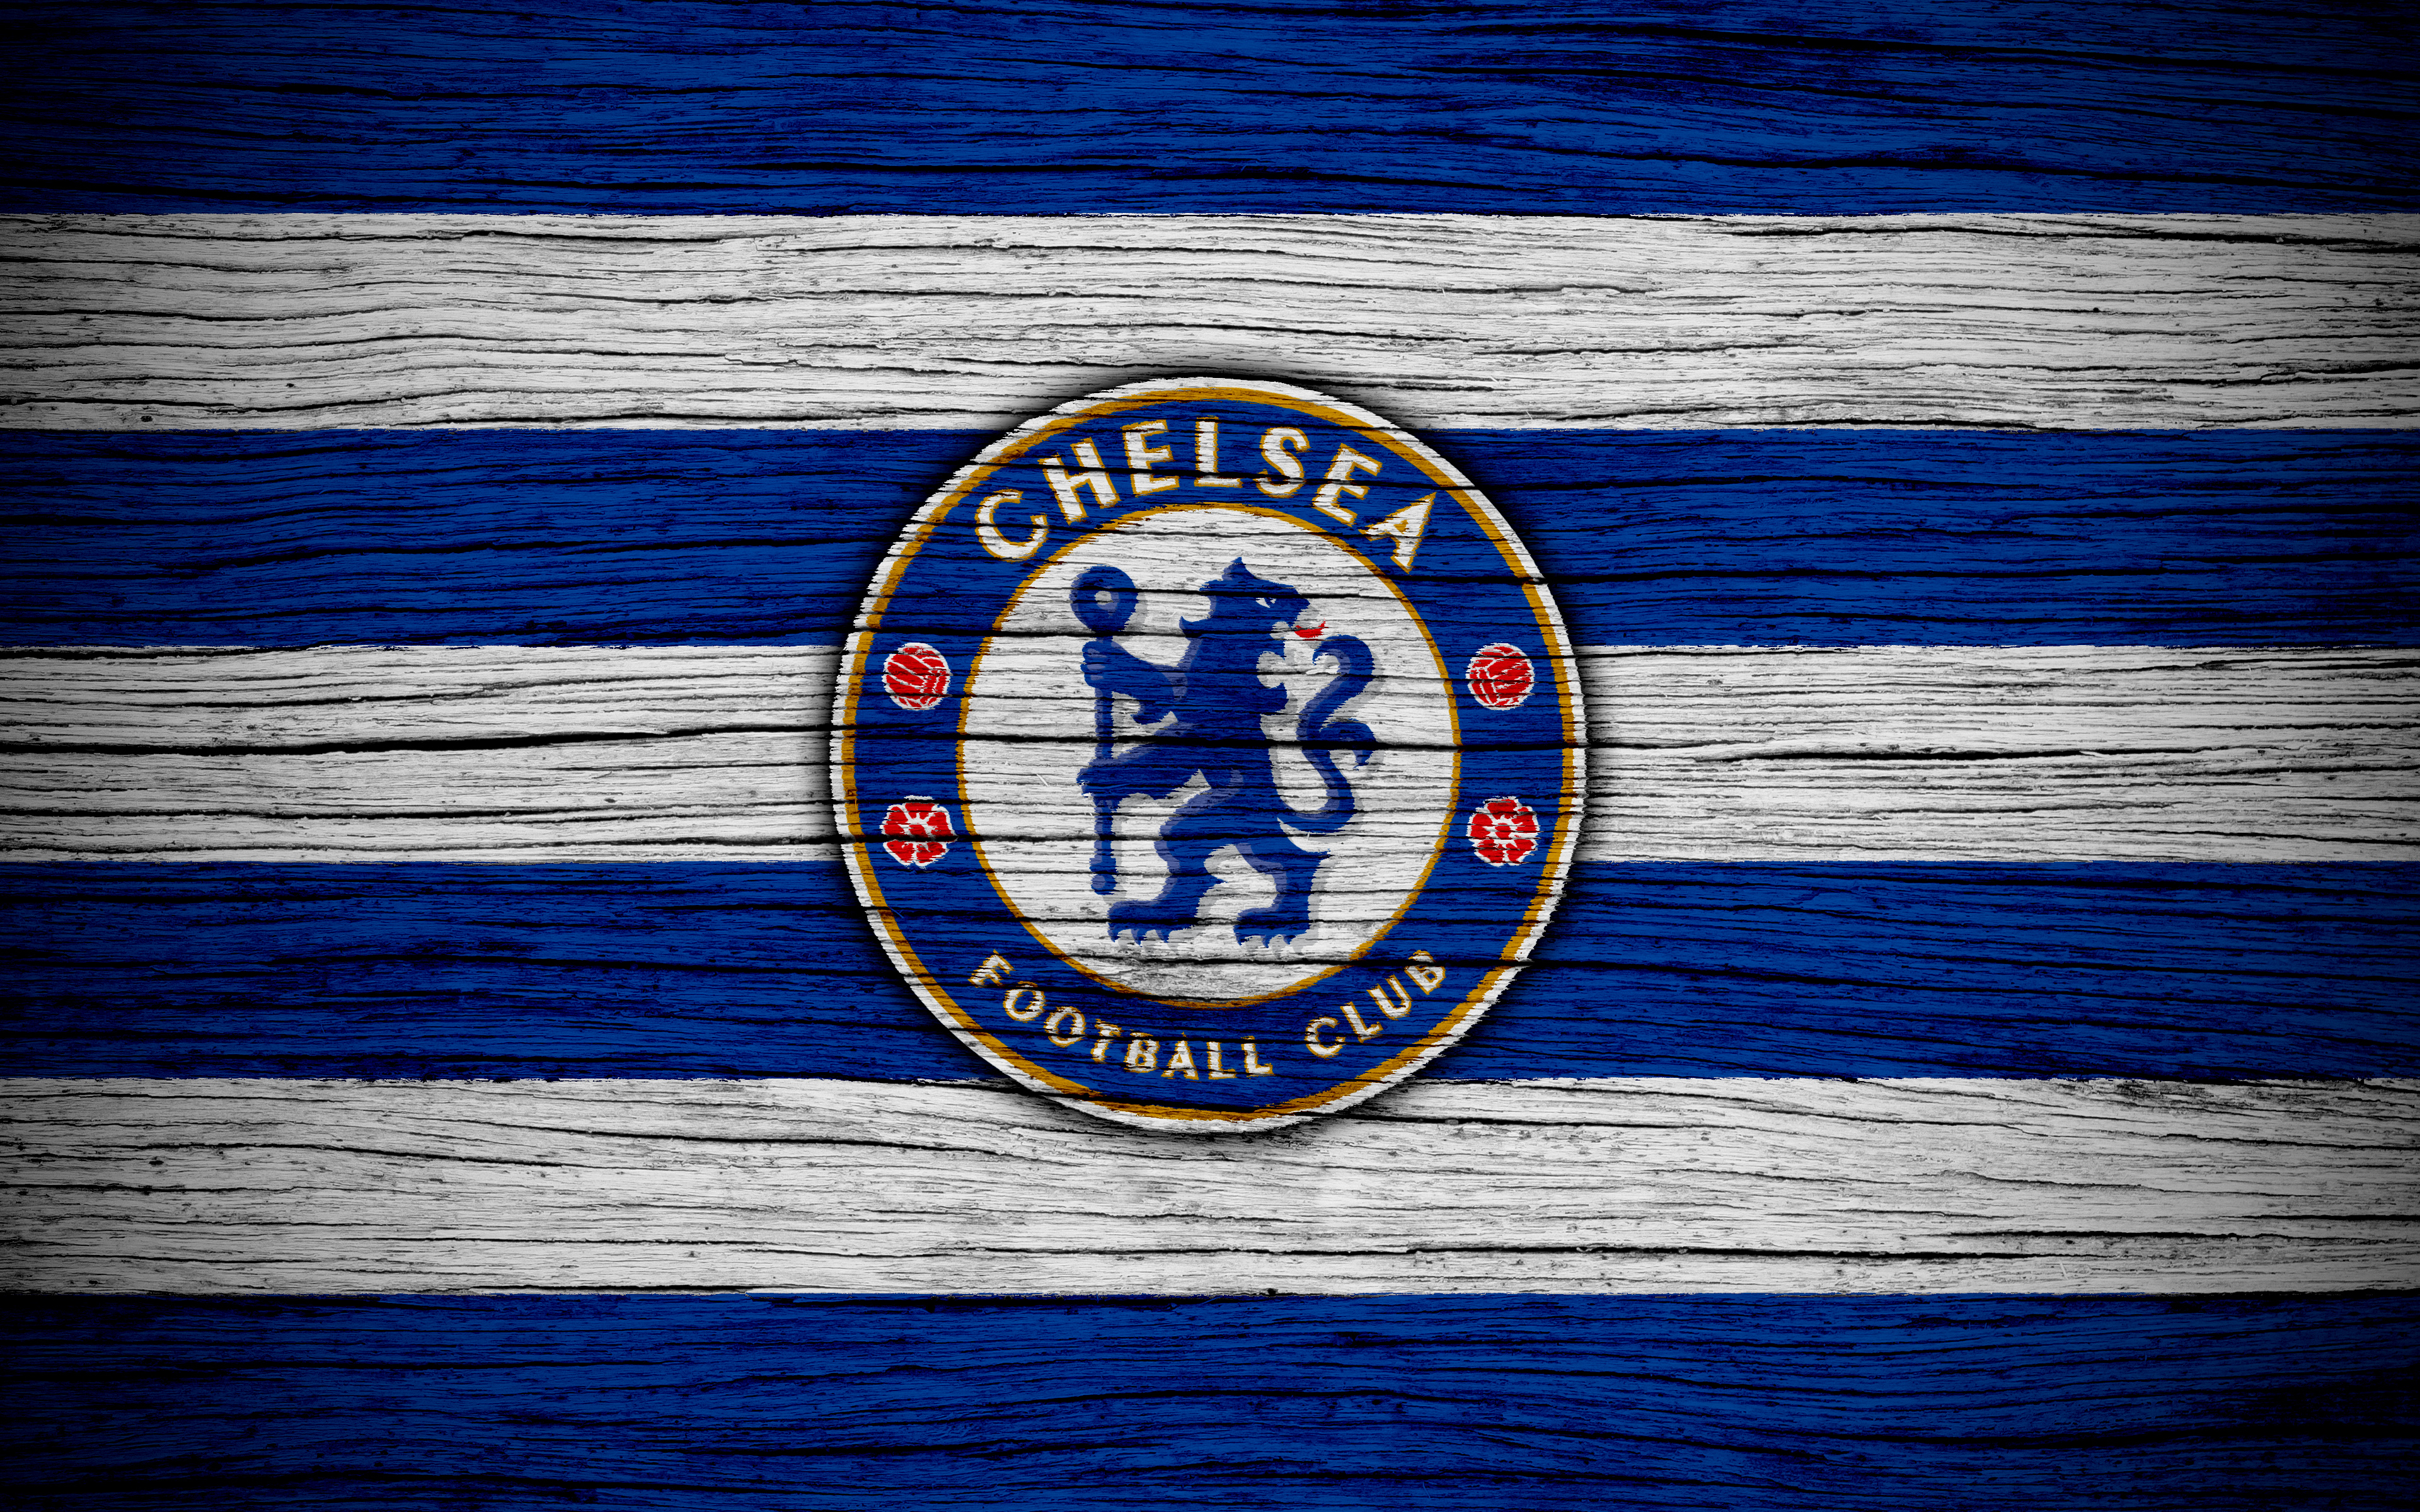 Chelsea FC Wallpaper - iXpap